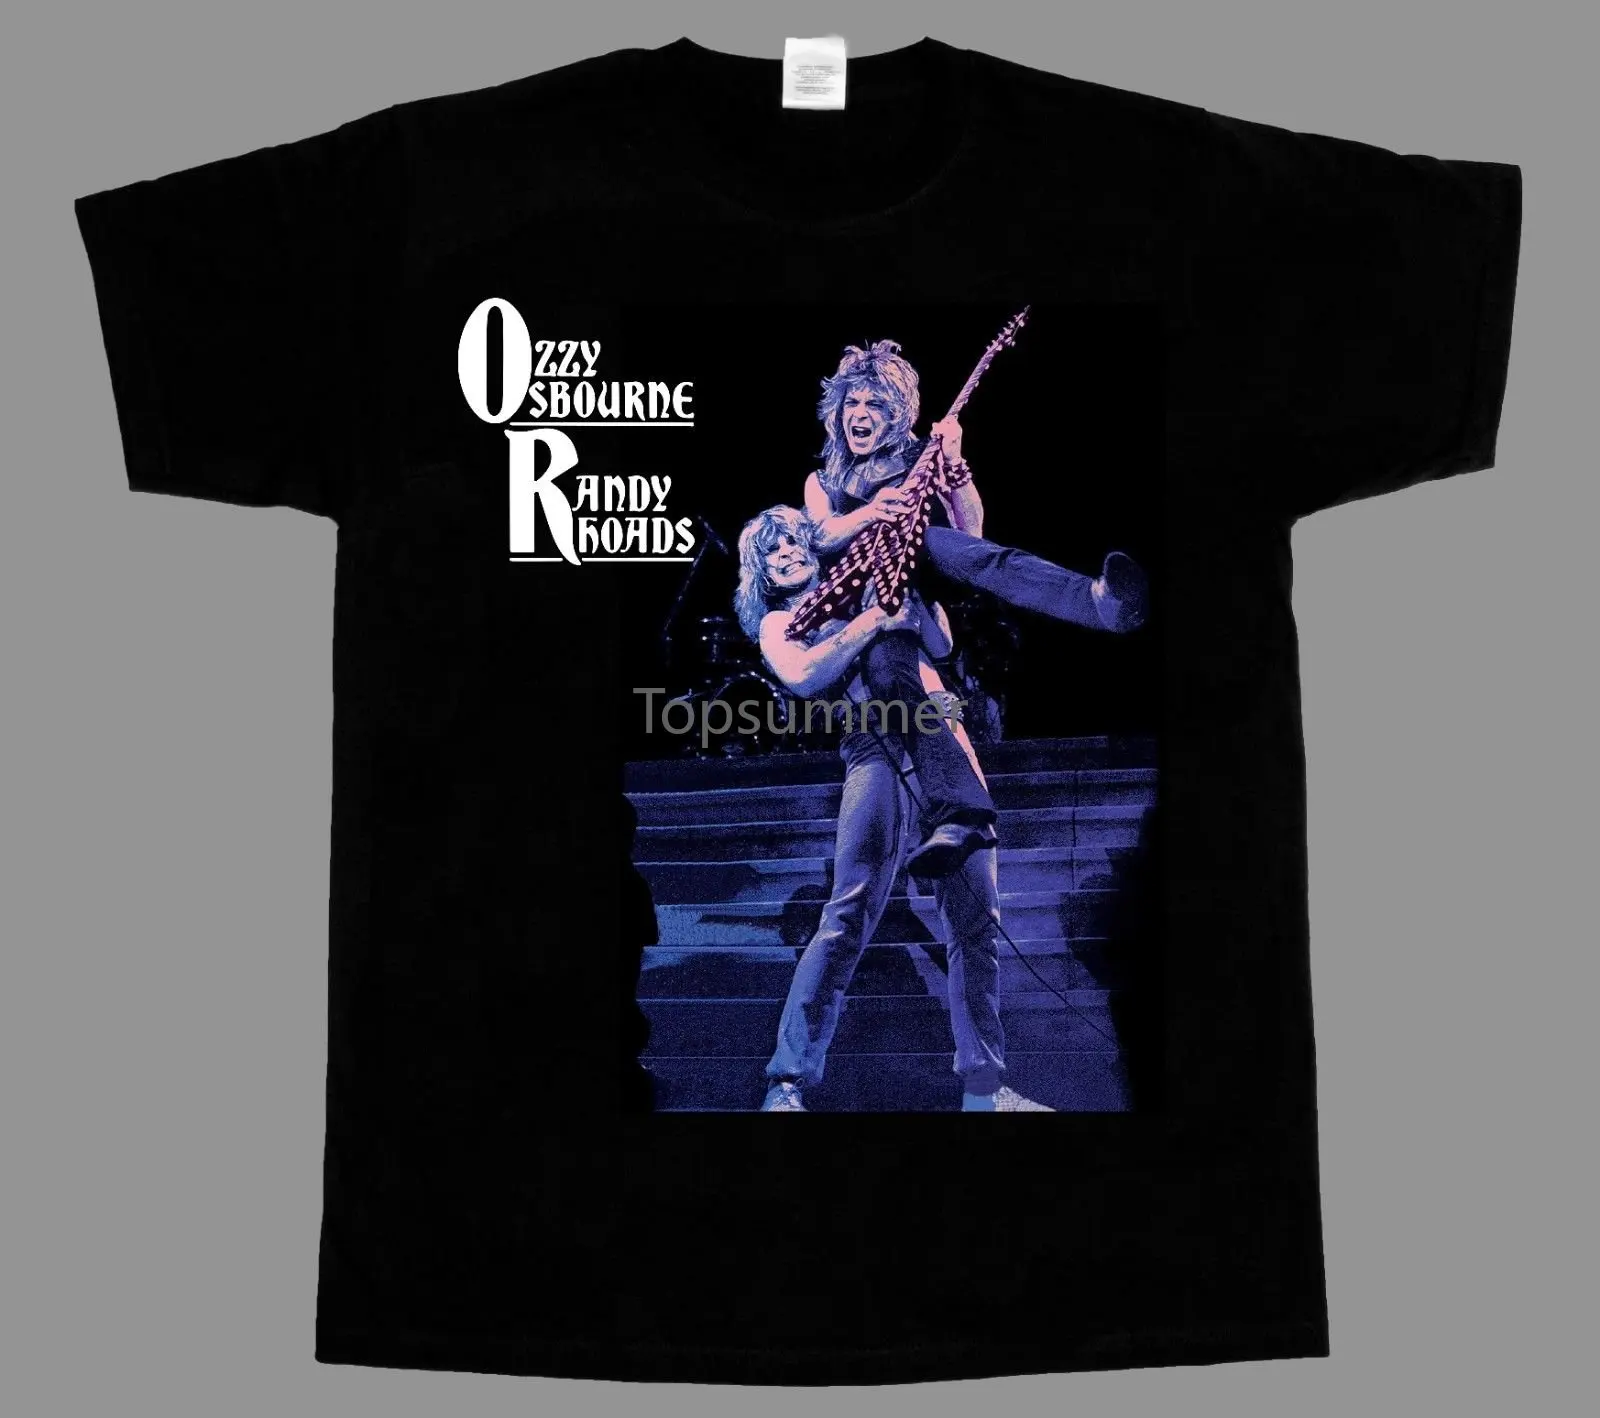 

Ozzy Osbourne Randy Rhoads New Short Long Sleeve Black T Shirt Hot New 2019 Summer Fashion T Shirts